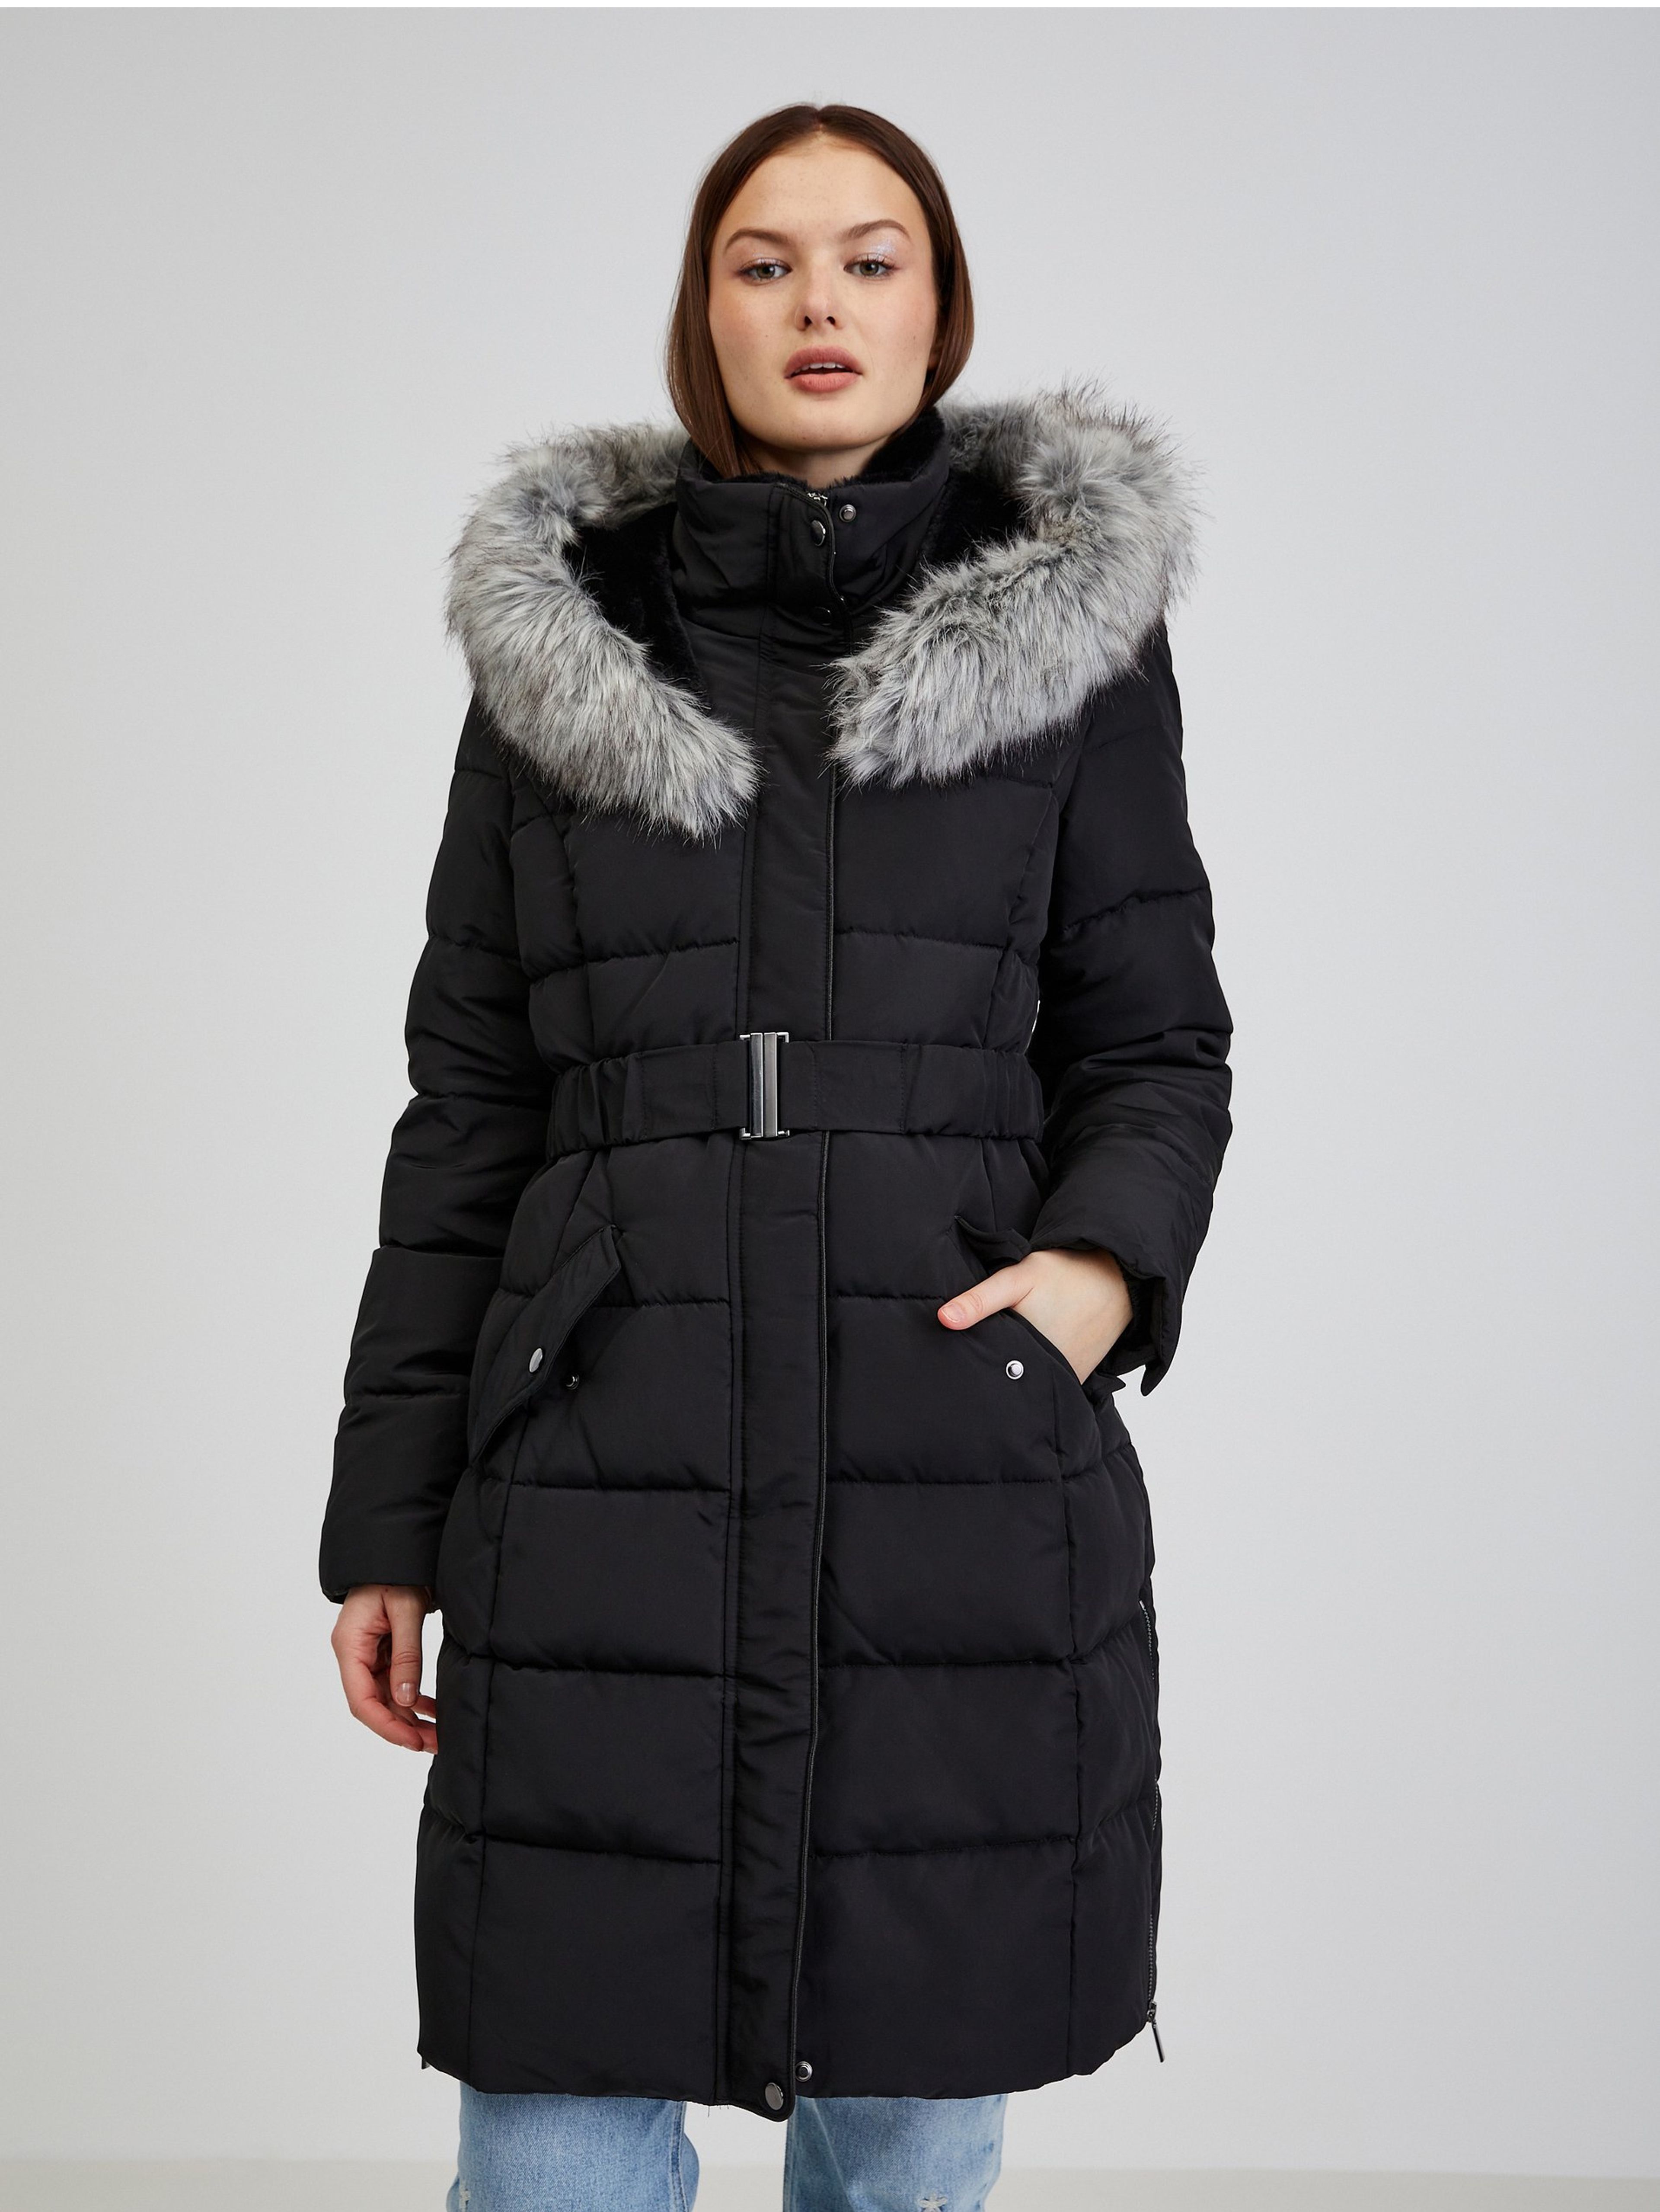 Čierny dámsky zimný kabát s kapucňou a umelou kožušinou ORSAY